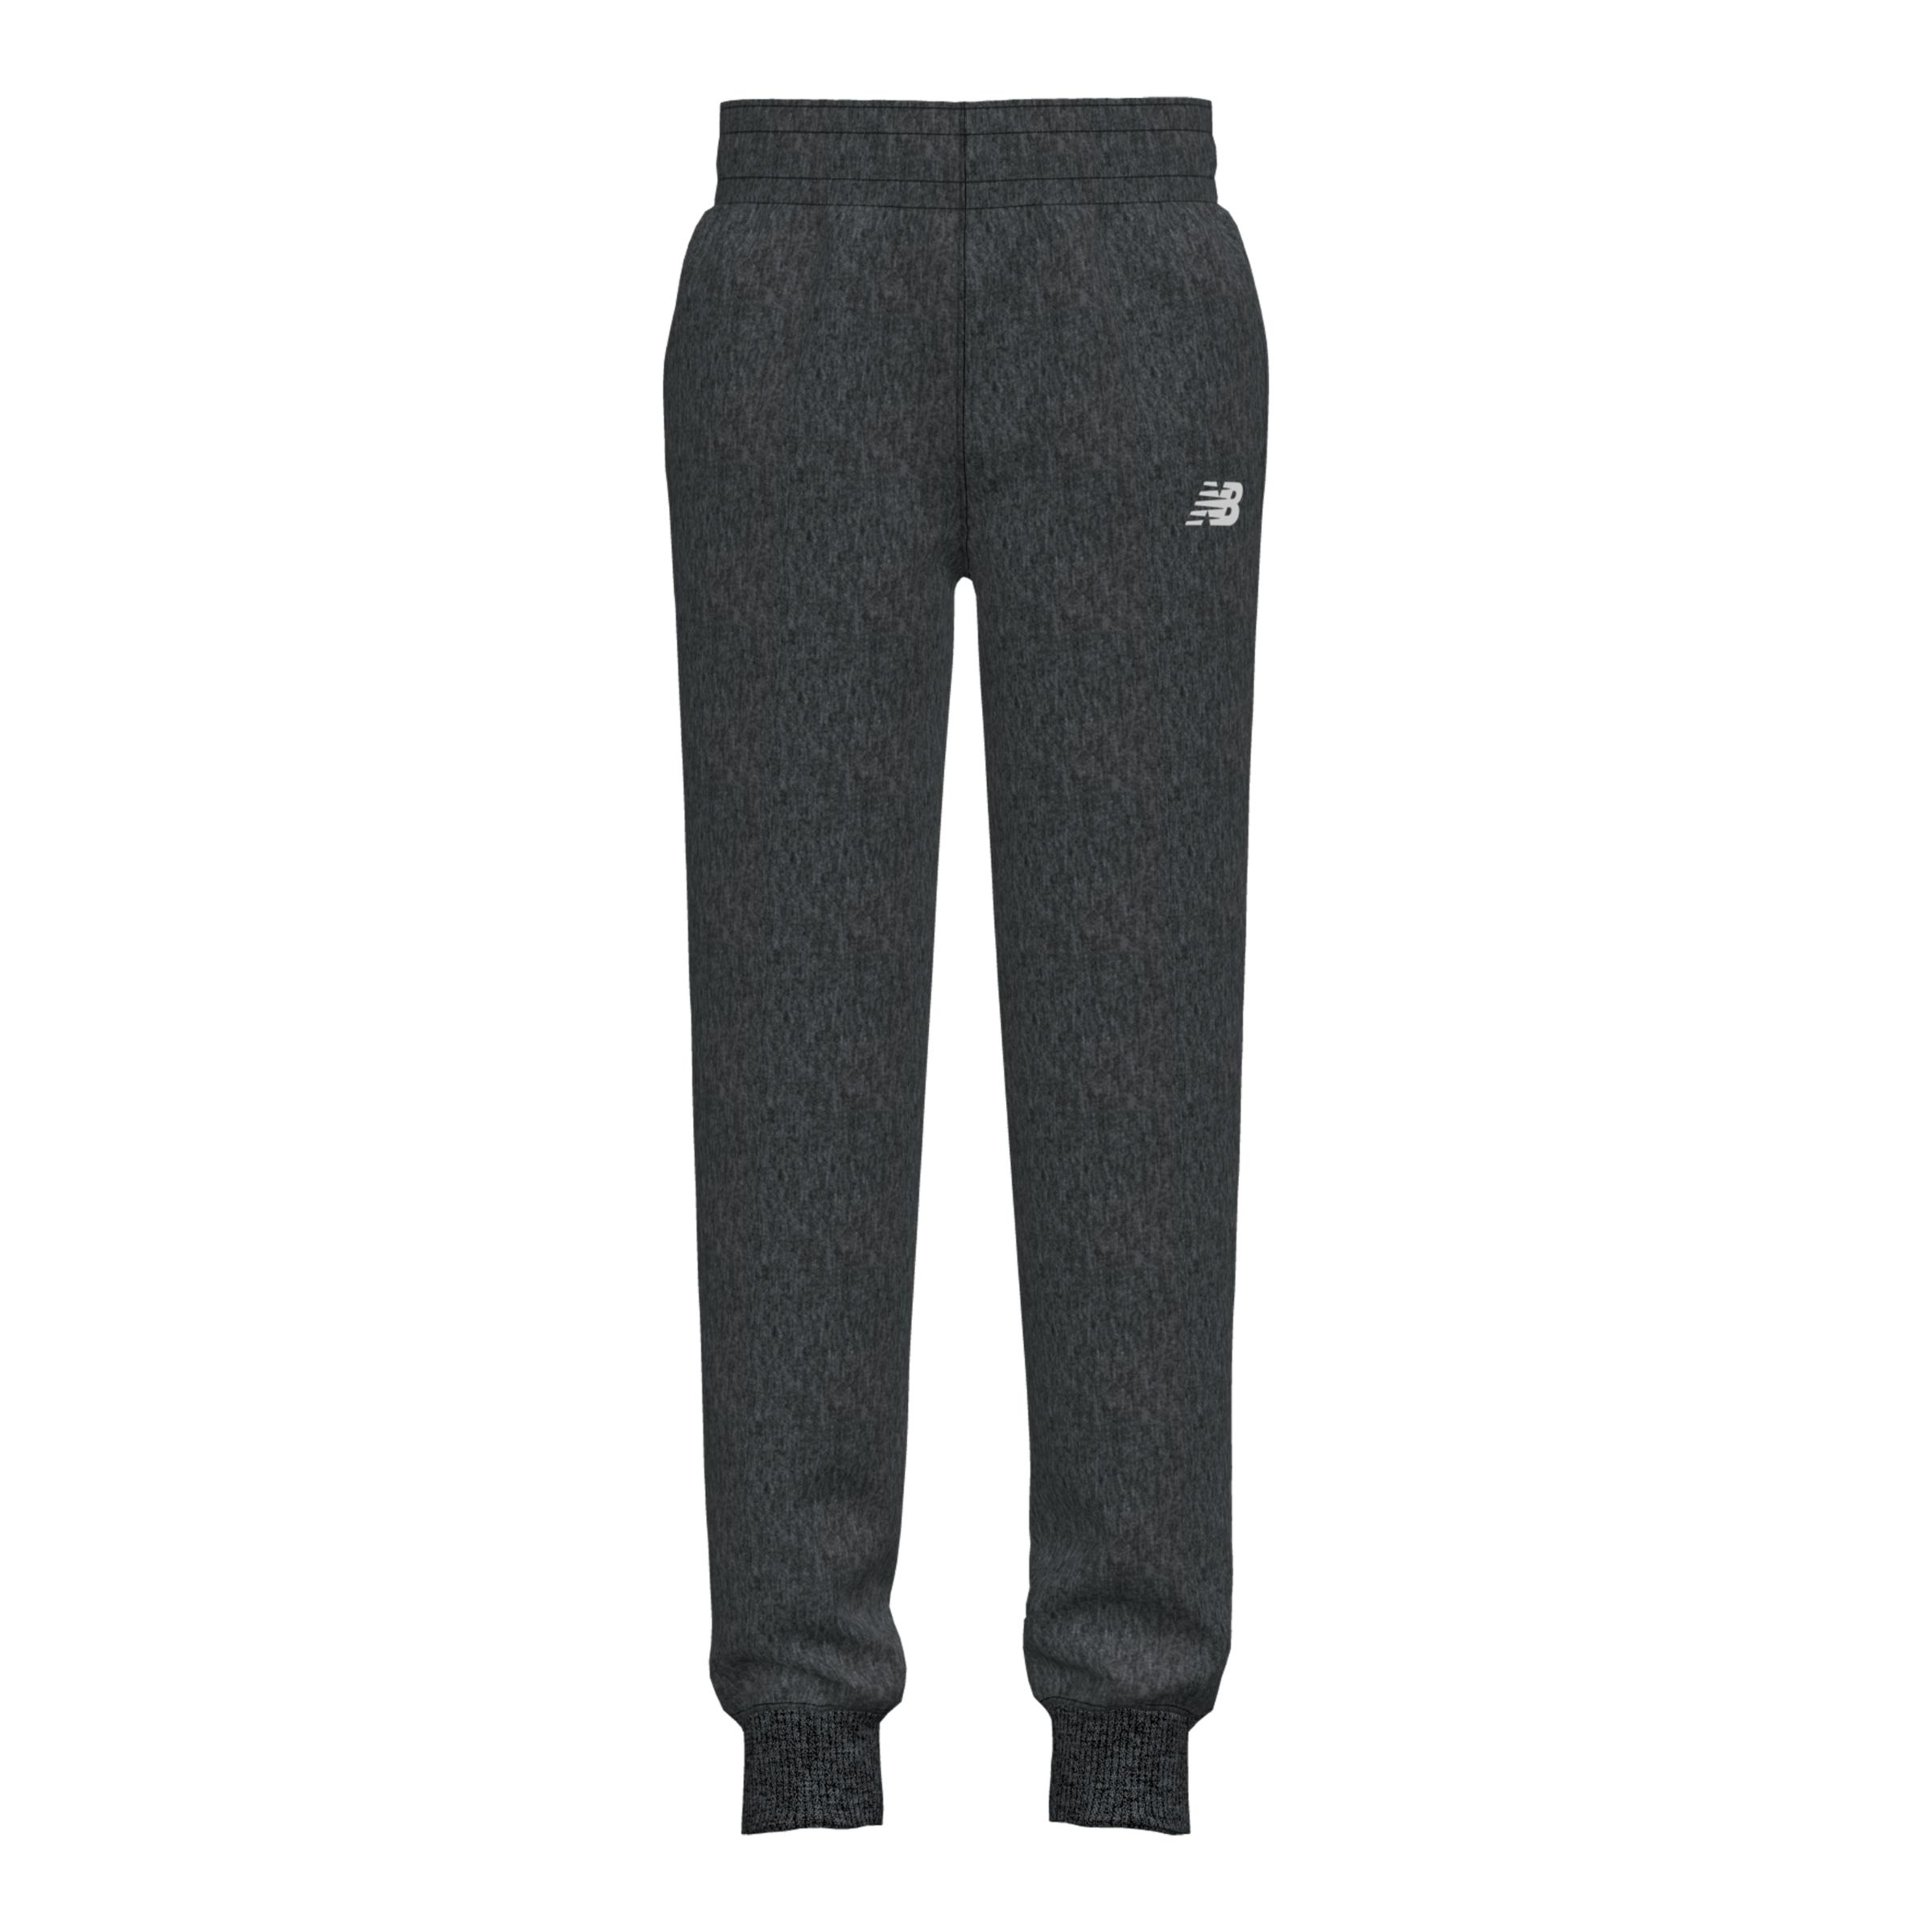 Buy New Balance Womens Classic Sweat Pants Athletic Grey